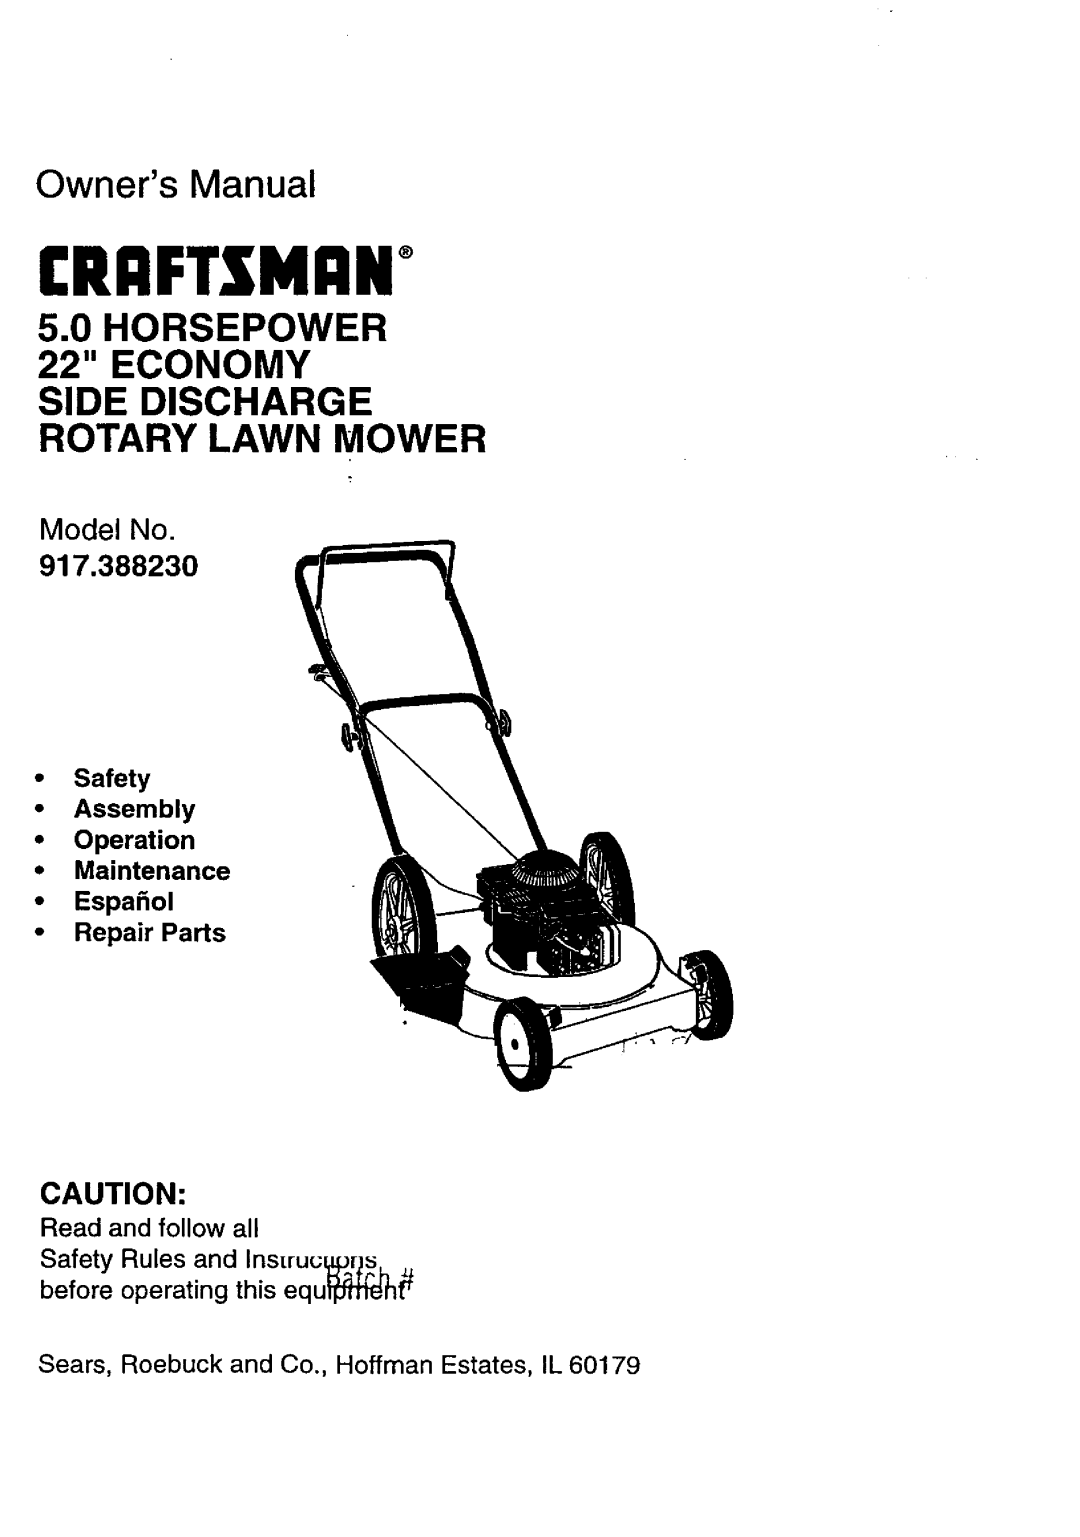 Craftsman 917.38823 owner manual Safety Assembly Operation Maintenance, Espafiol Repair Parts, Craftsman, Model No 